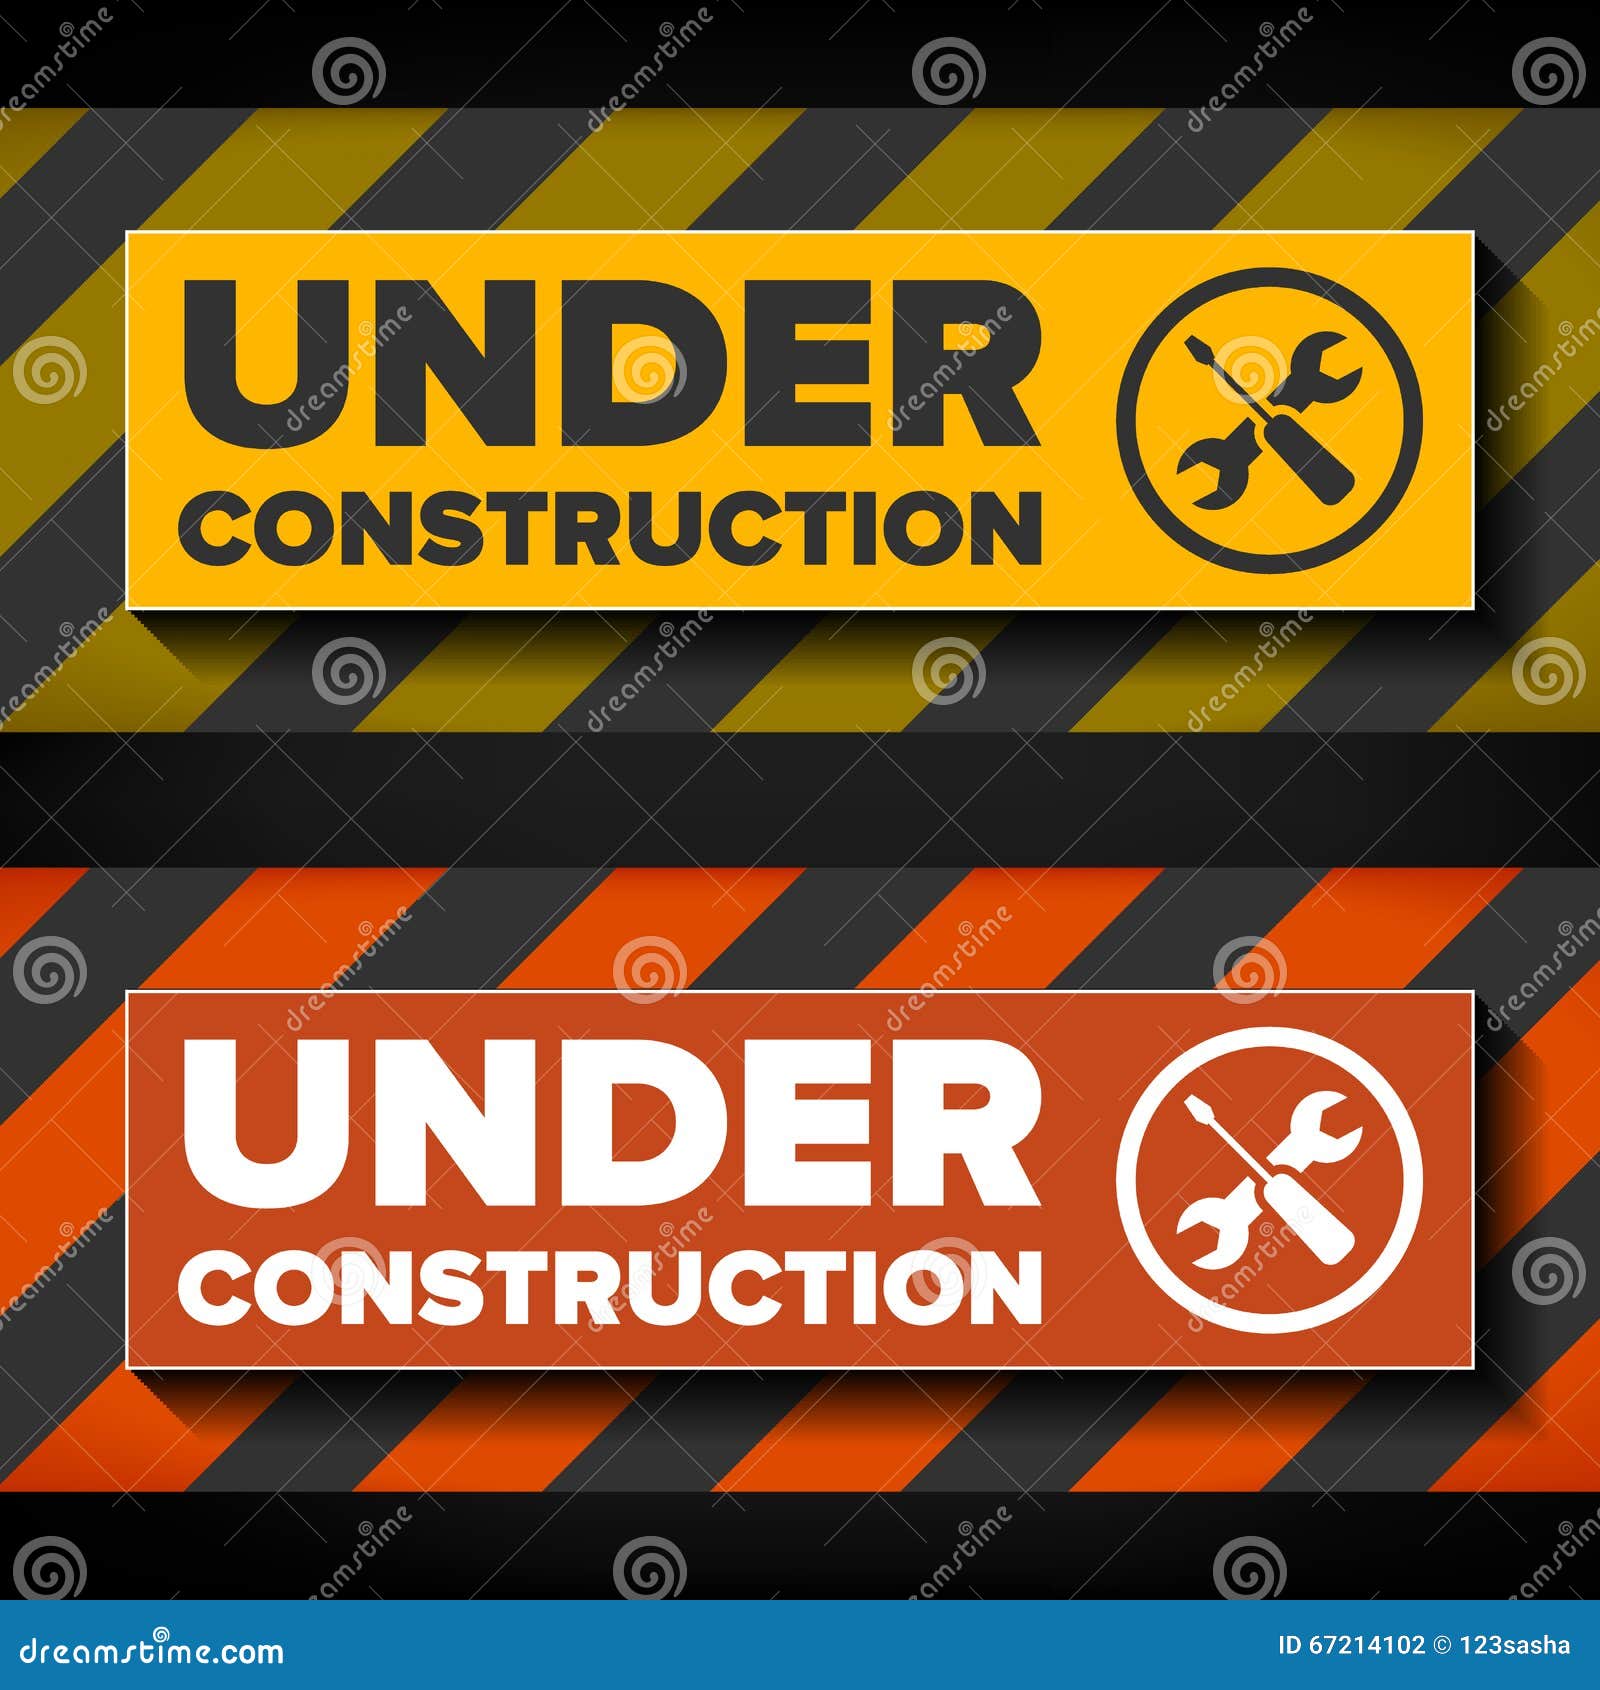 Under construction sign stock vector. Illustration of orange - 67214102